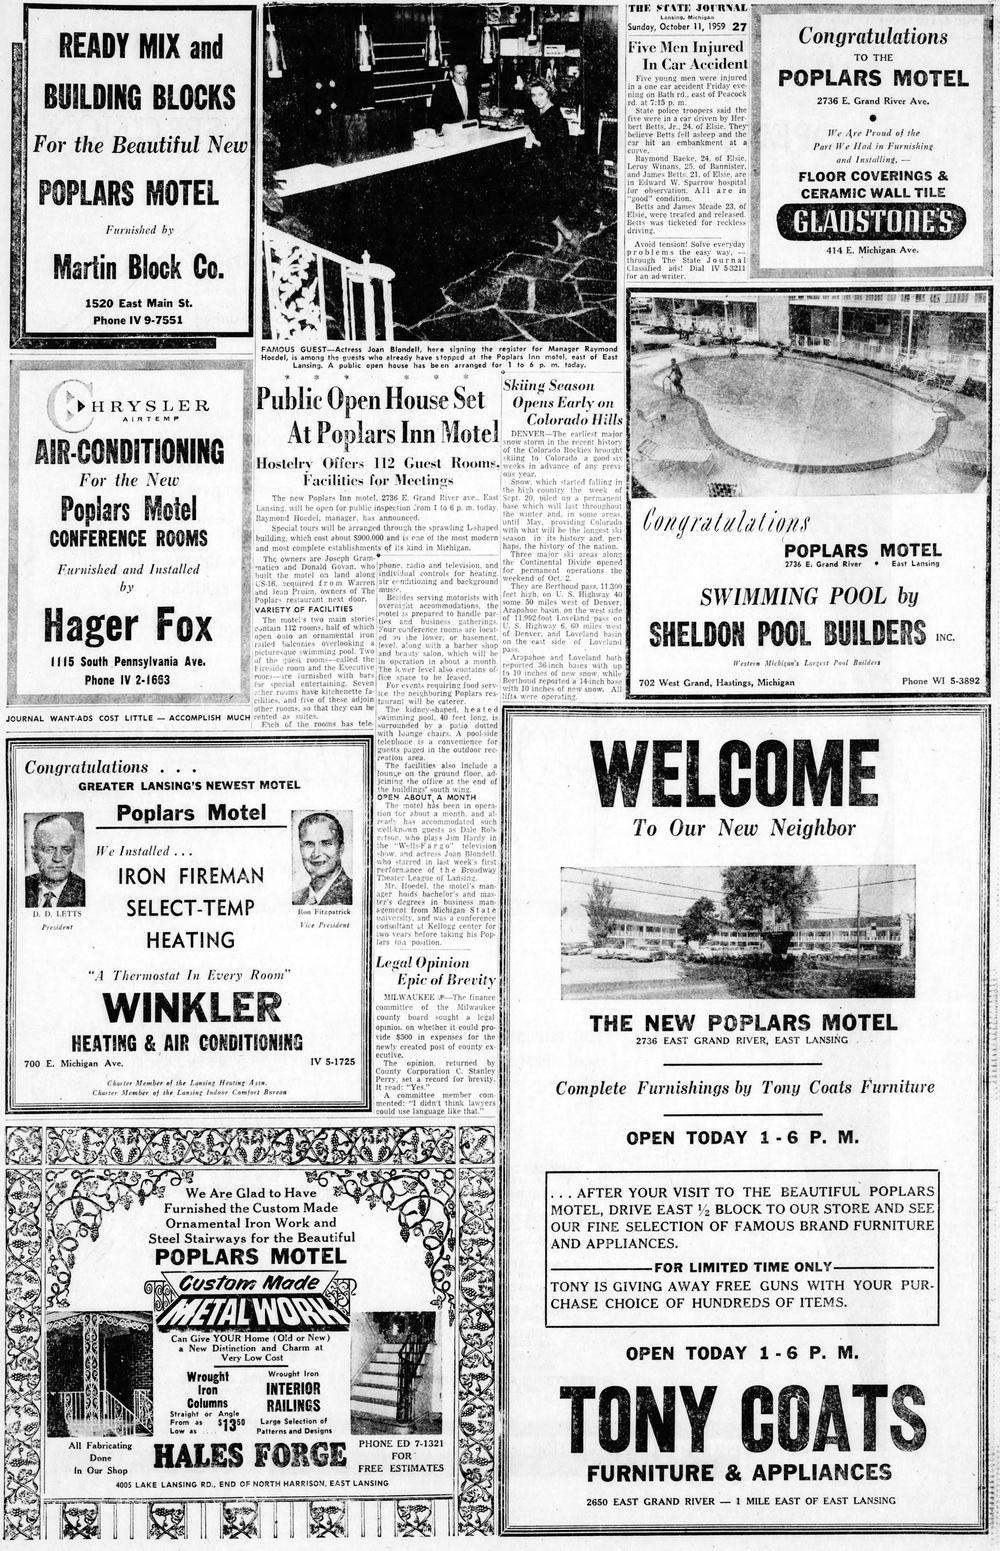 Poplars Motel (Clarion Pointe East) - Lansing State Journal Sun Oct 11 1959